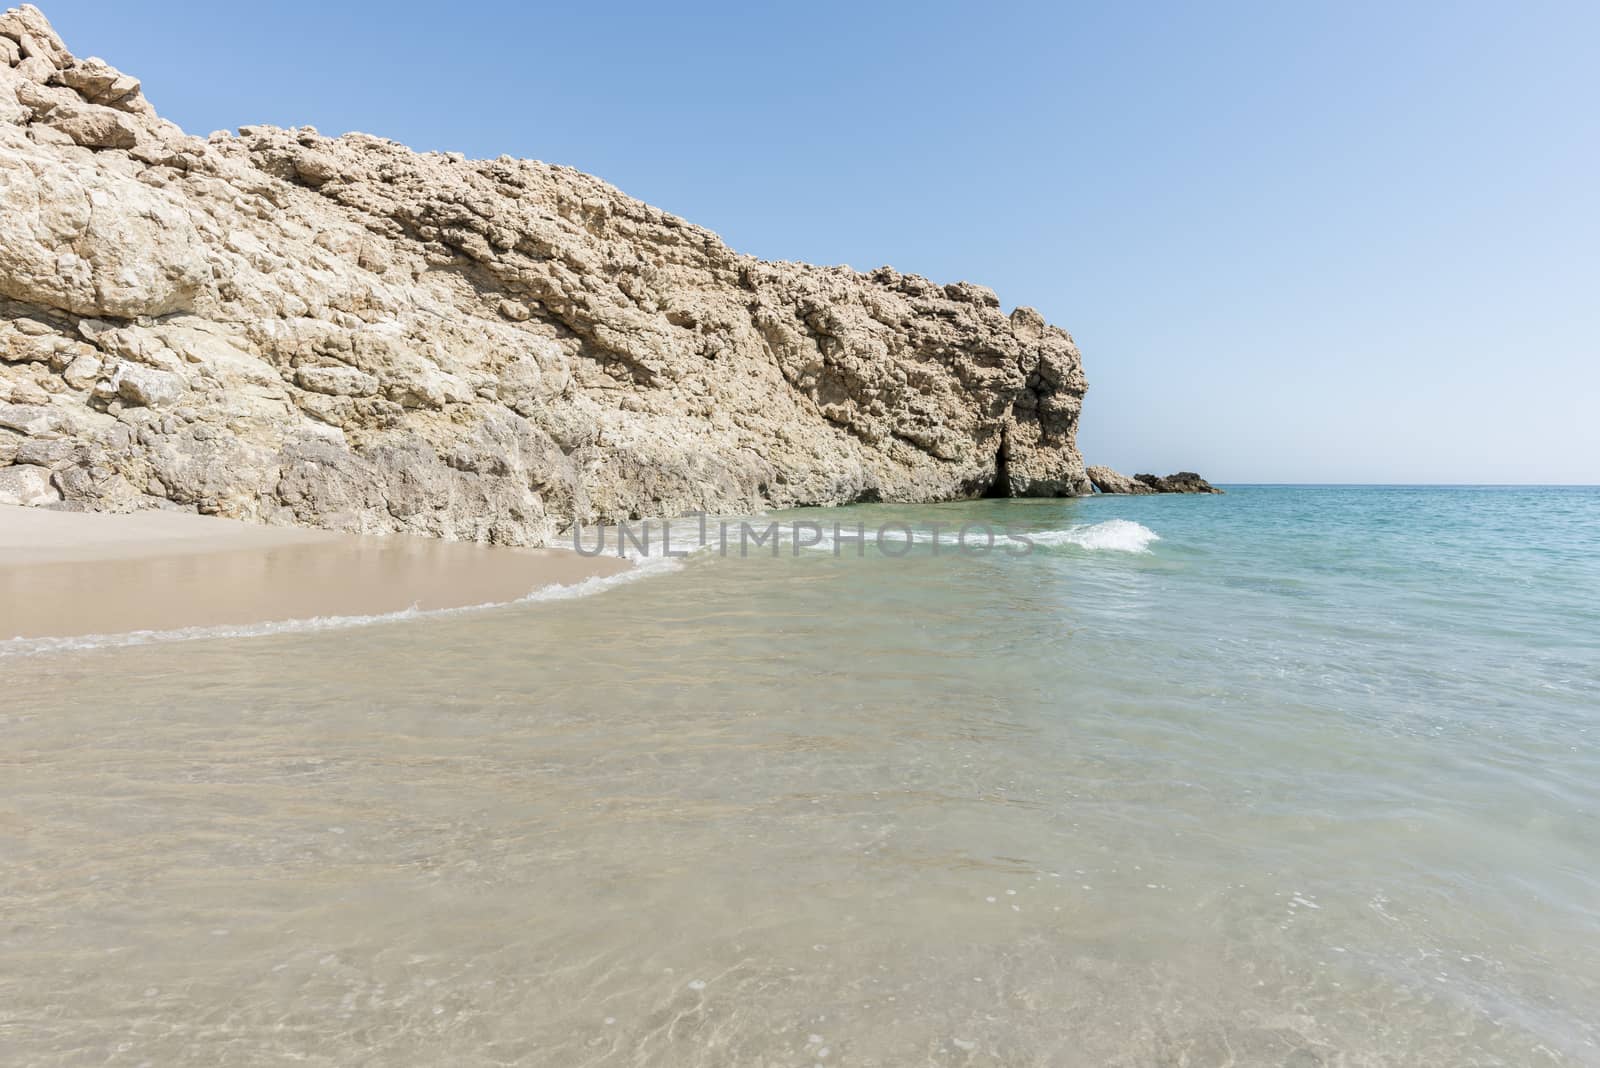 Idyllic Beach at wild coast of Ras Al Jinz, Oman by GABIS